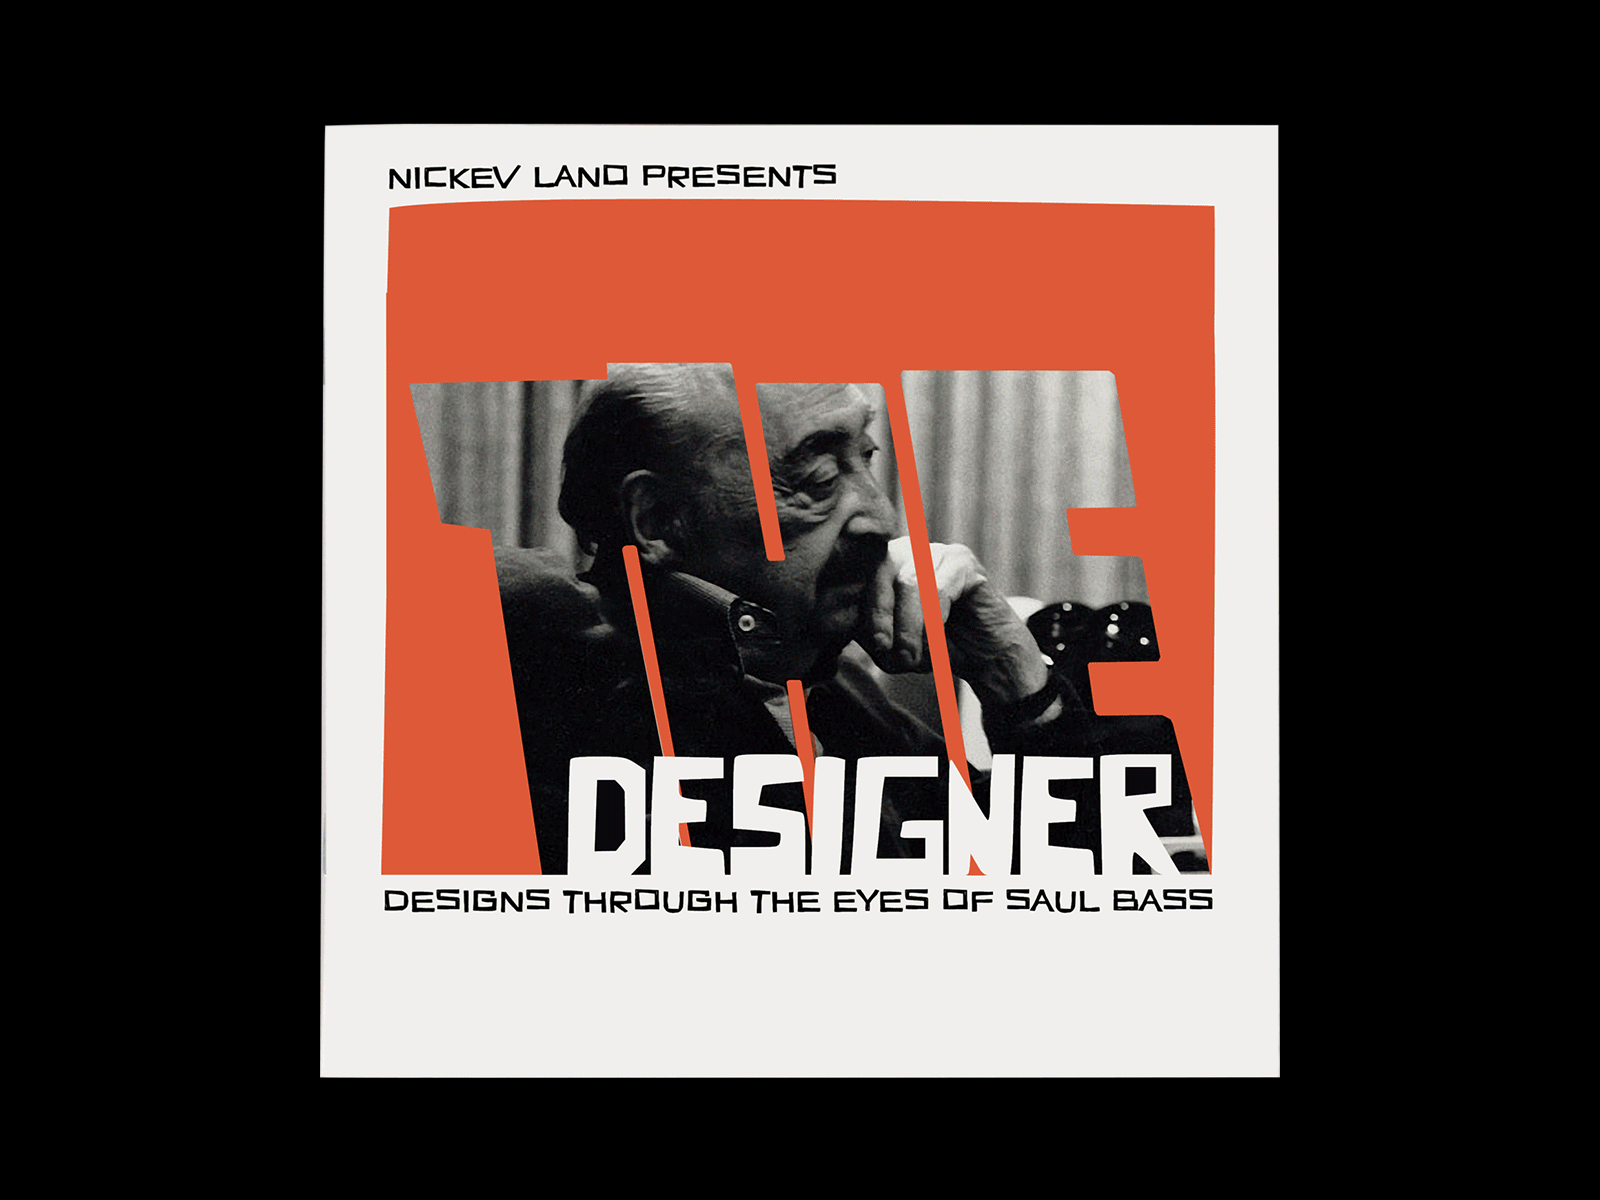 The Designer: Design Through The Eyes of Saul Bass